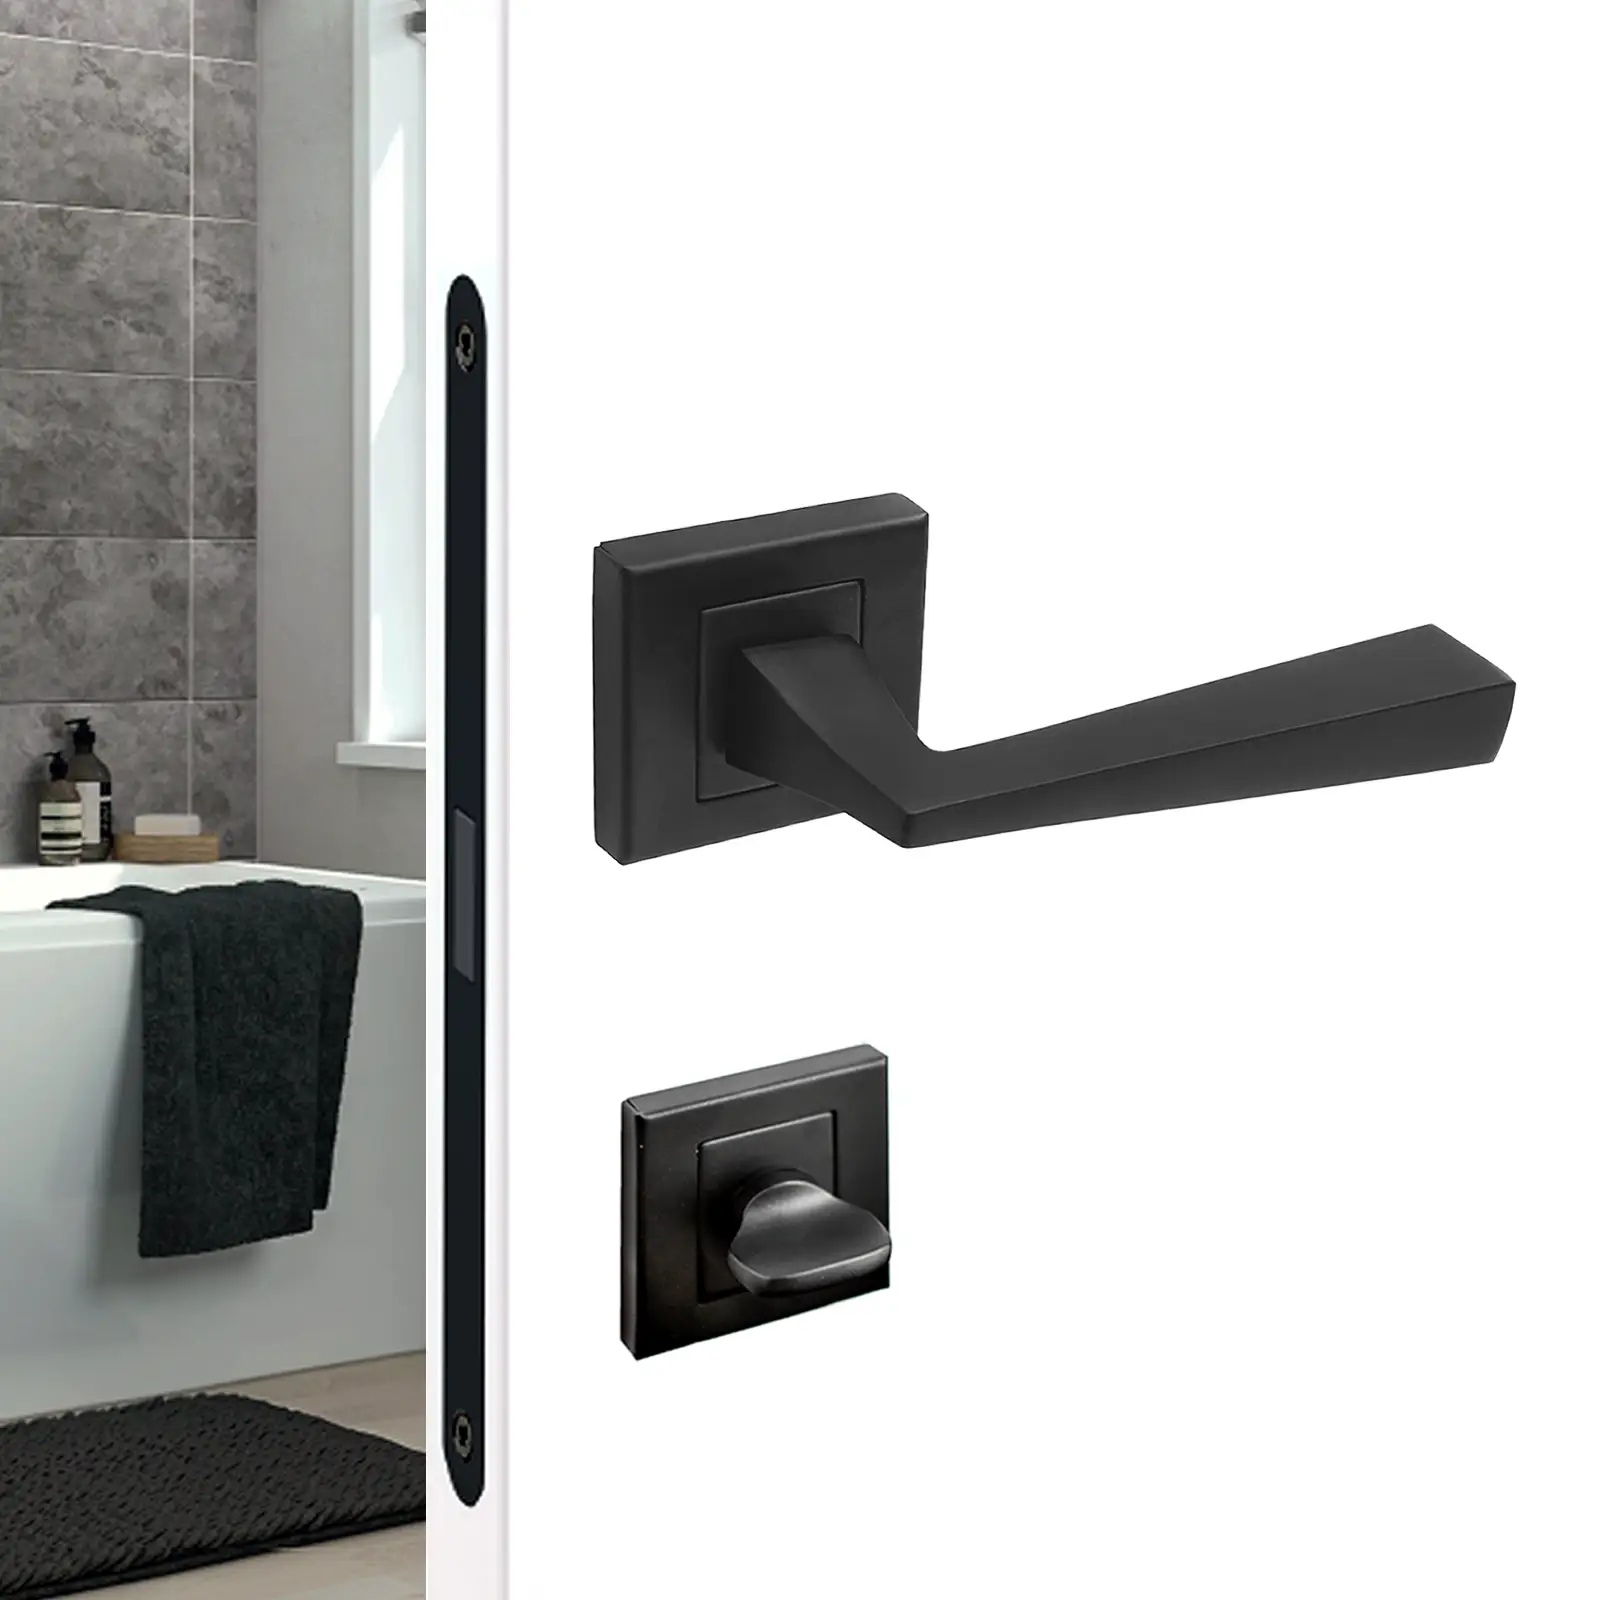 Helix Matt Black Bathroom Door Lever Handles - Bathroom Kit Set - Decor And Decor